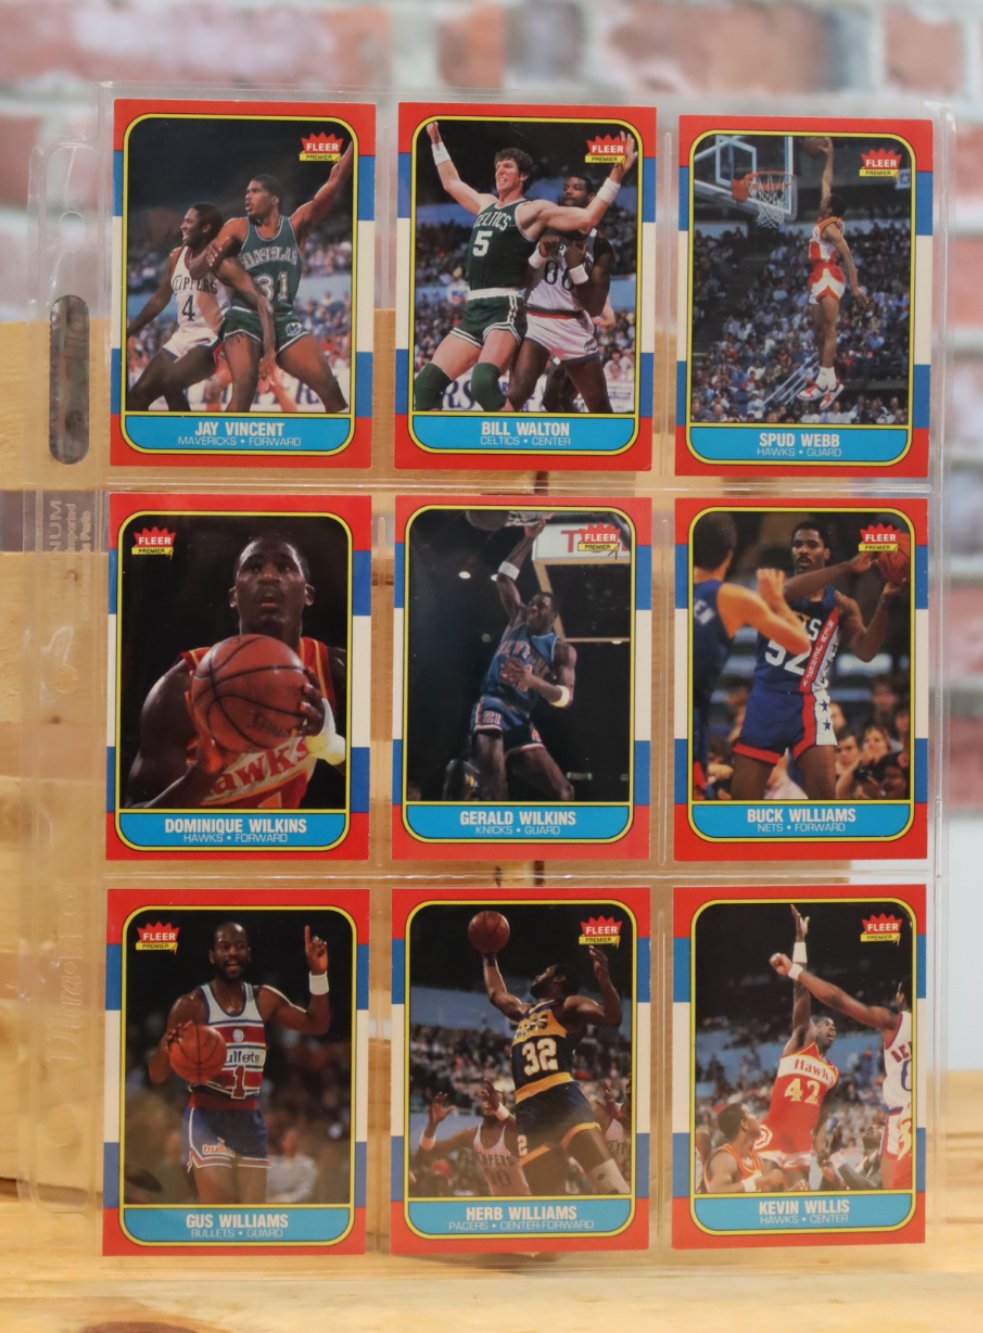 1986 Fleer Basketball Set Complete Including Michael Jordan Rookie Card, Stickers